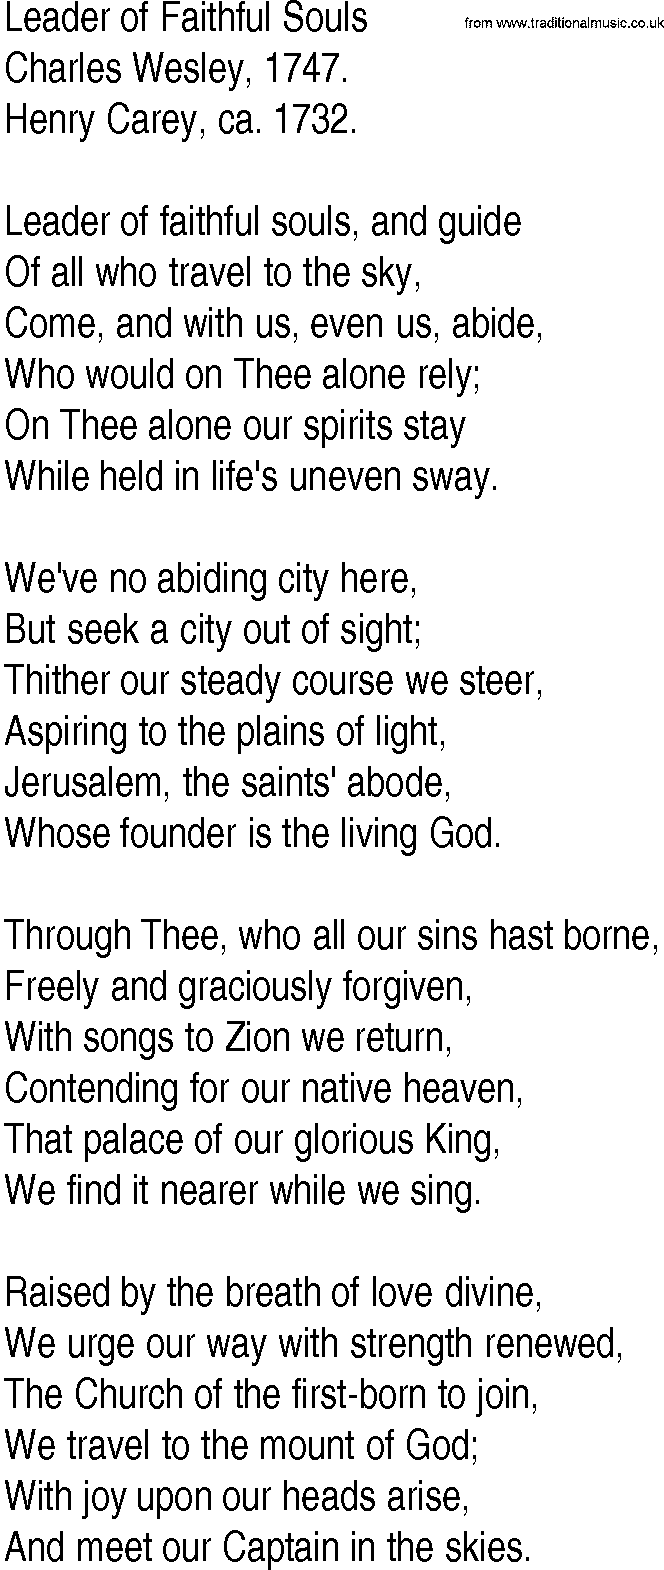 Hymn and Gospel Song: Leader of Faithful Souls by Charles Wesley lyrics